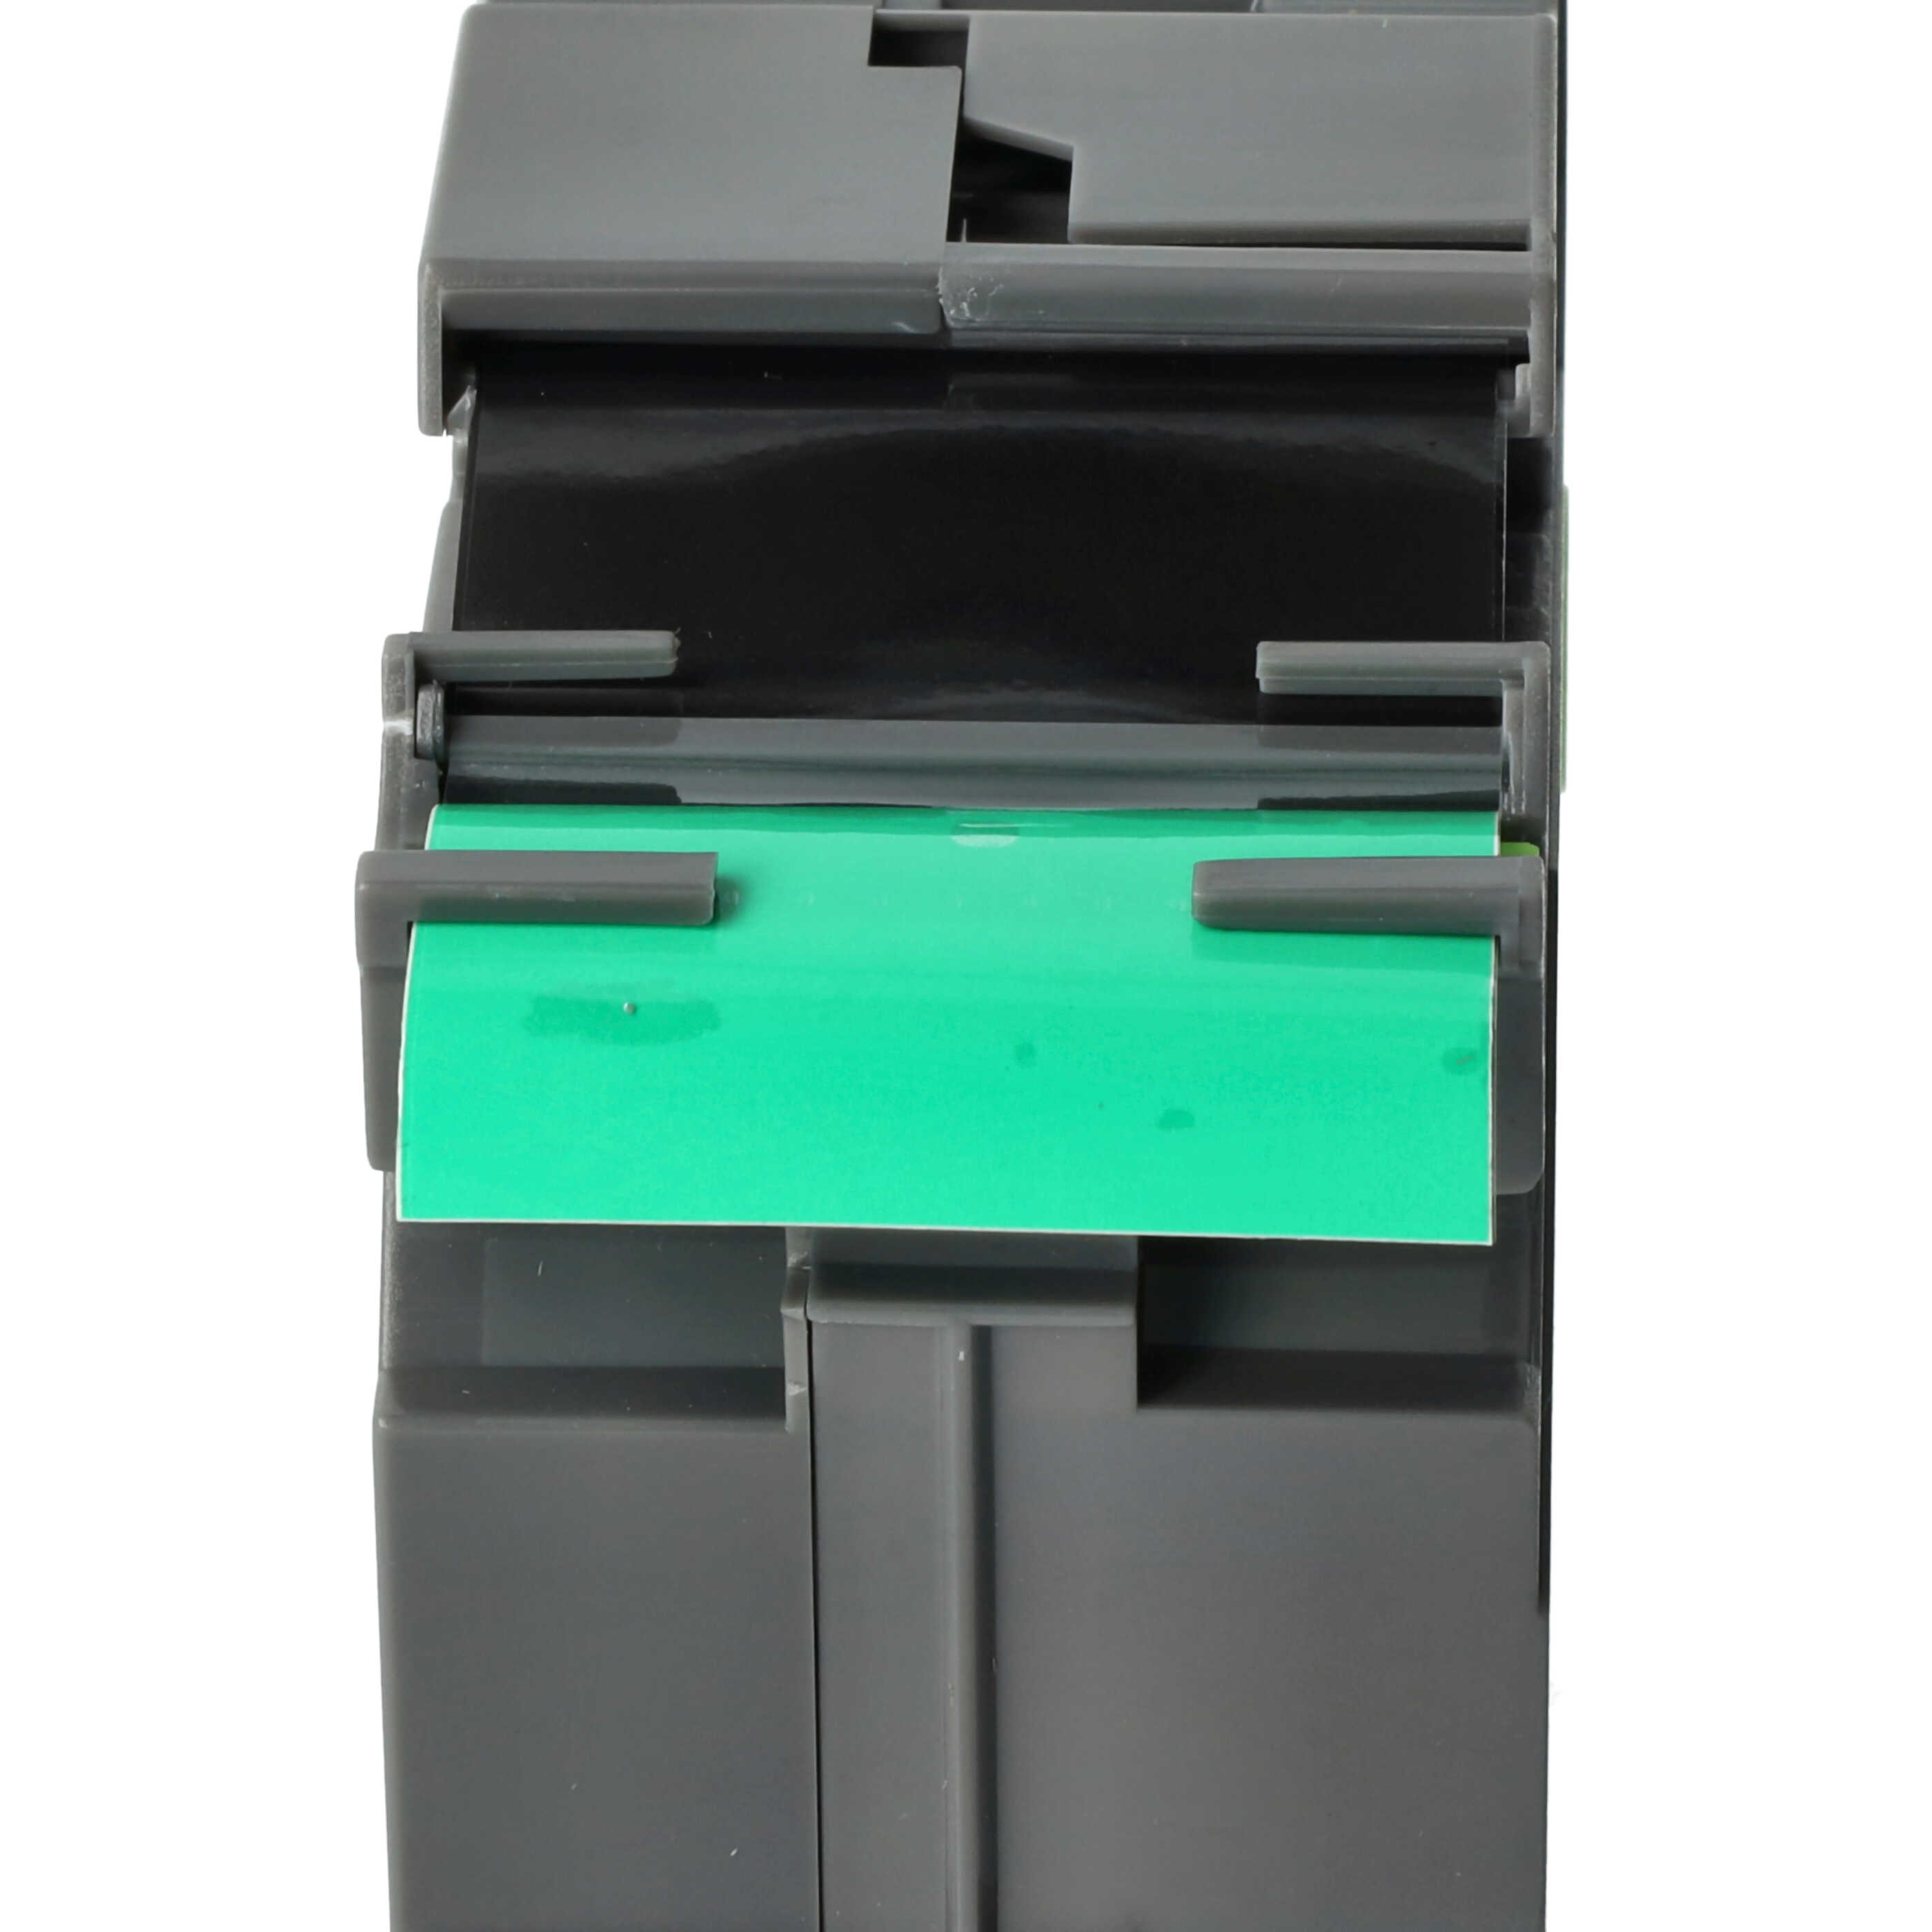 Casete cinta escritura reemplaza Brother TZ-FX761, TZE-FX761, TZeFX761, TZFX761 Negro su Verde